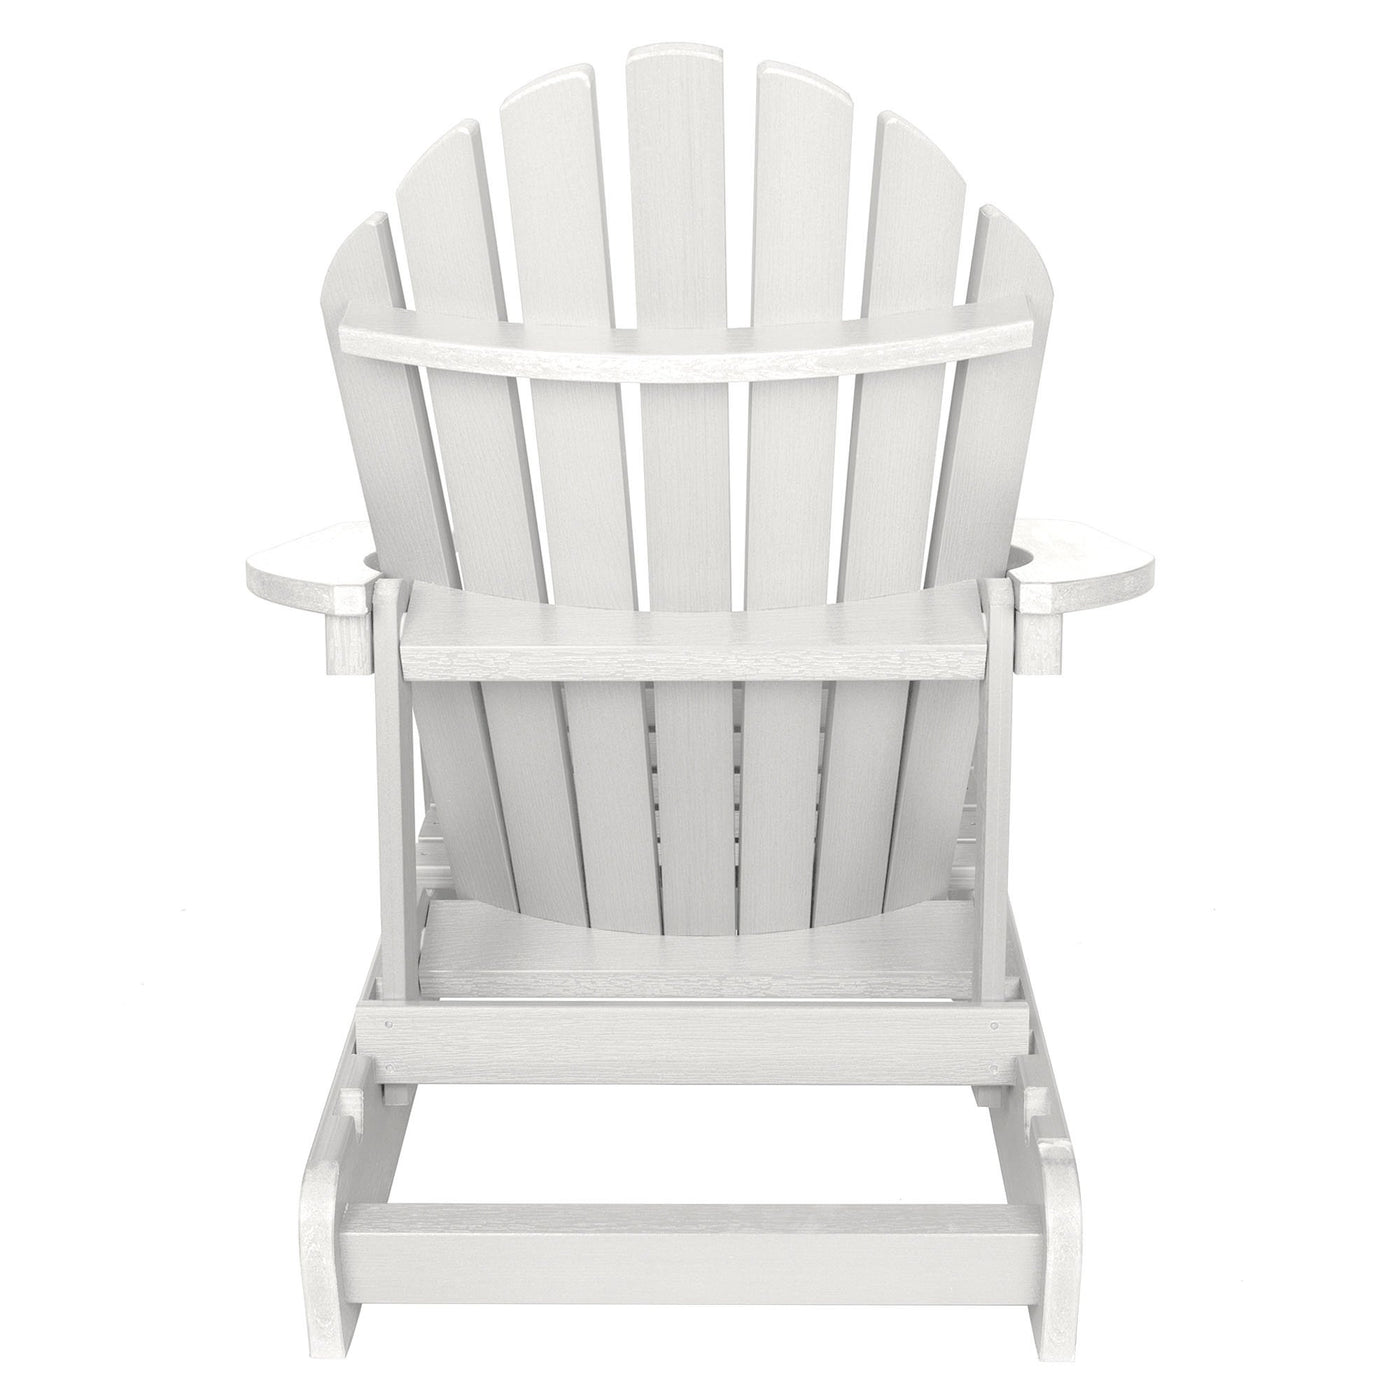 Back view of Hamilton Adirondack chair in White